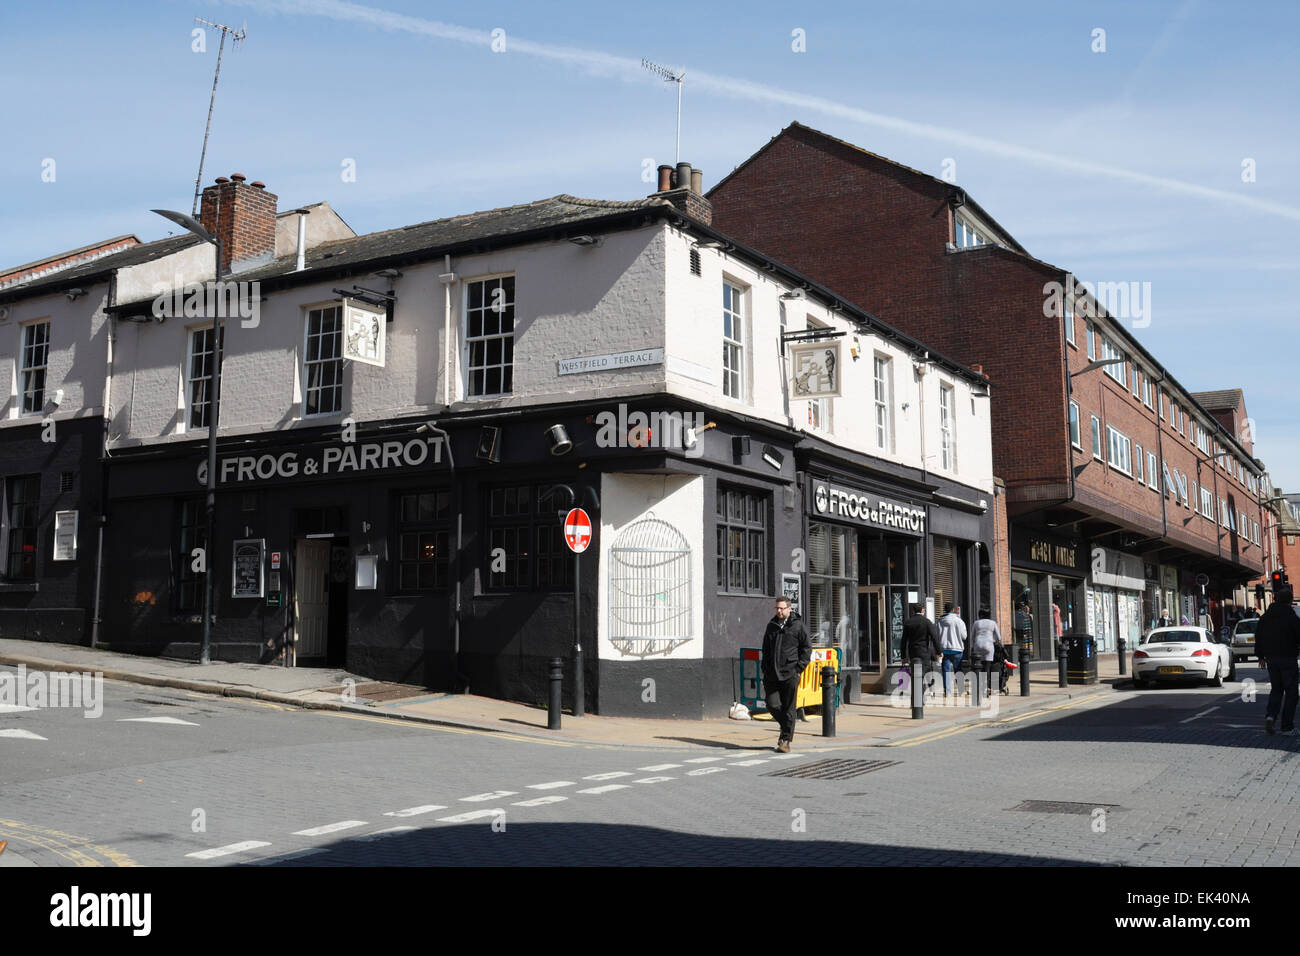 Le pub Frog and Parrot sur Division Street Sheffield centre-ville Angleterre Royaume-Uni Englis Street coin public House Banque D'Images